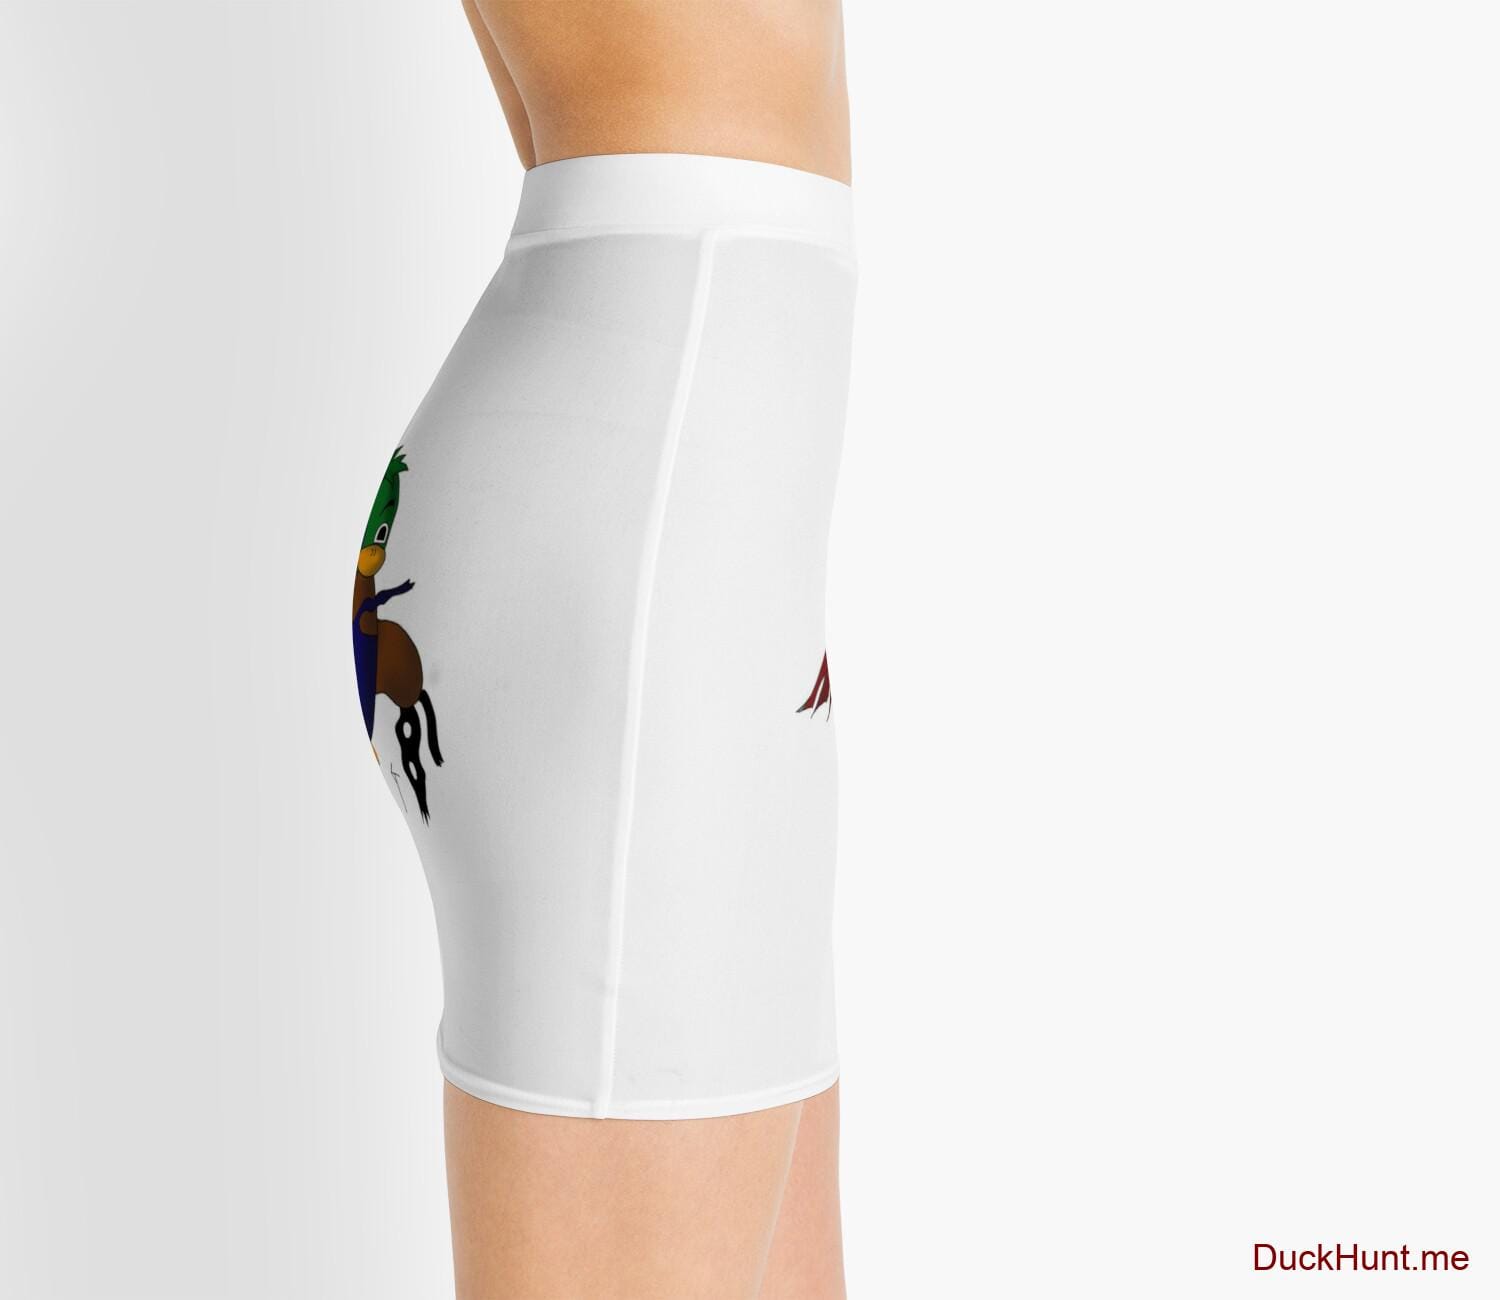 Dead DuckHunt Boss (smokeless) Mini Skirt alternative image 1